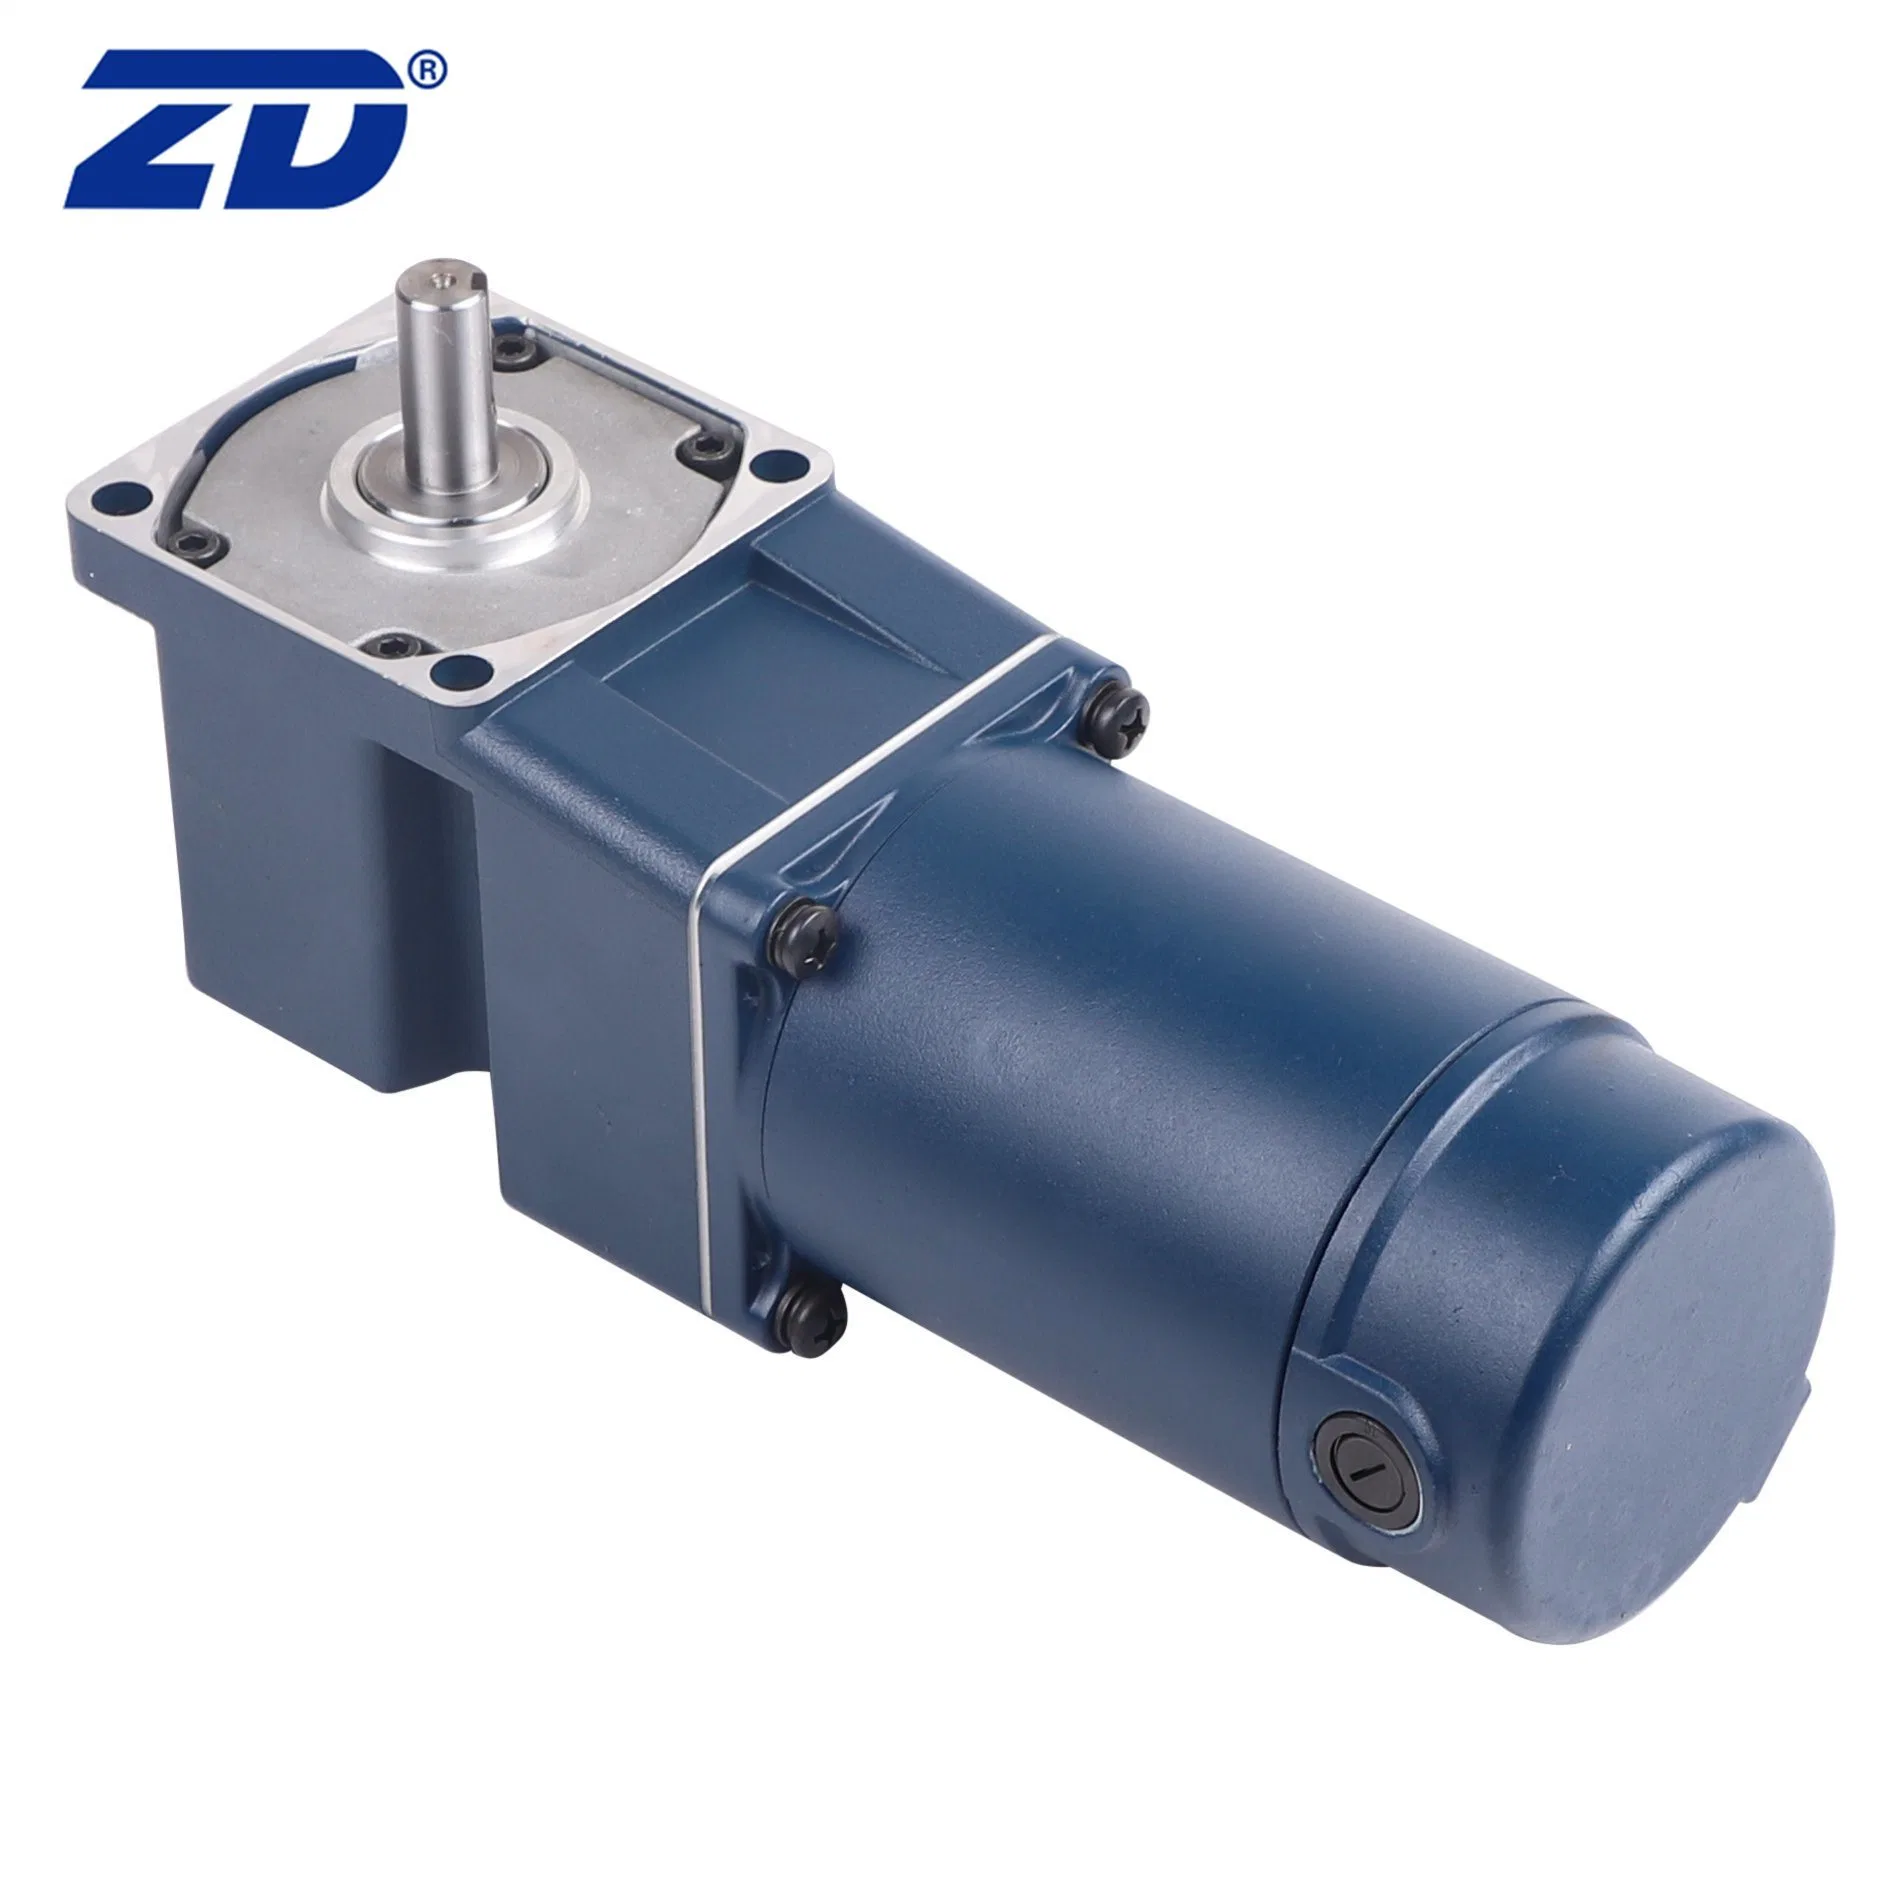 ZD Industrial Brushed Electric DC Gear Motor for Digital UV Printer